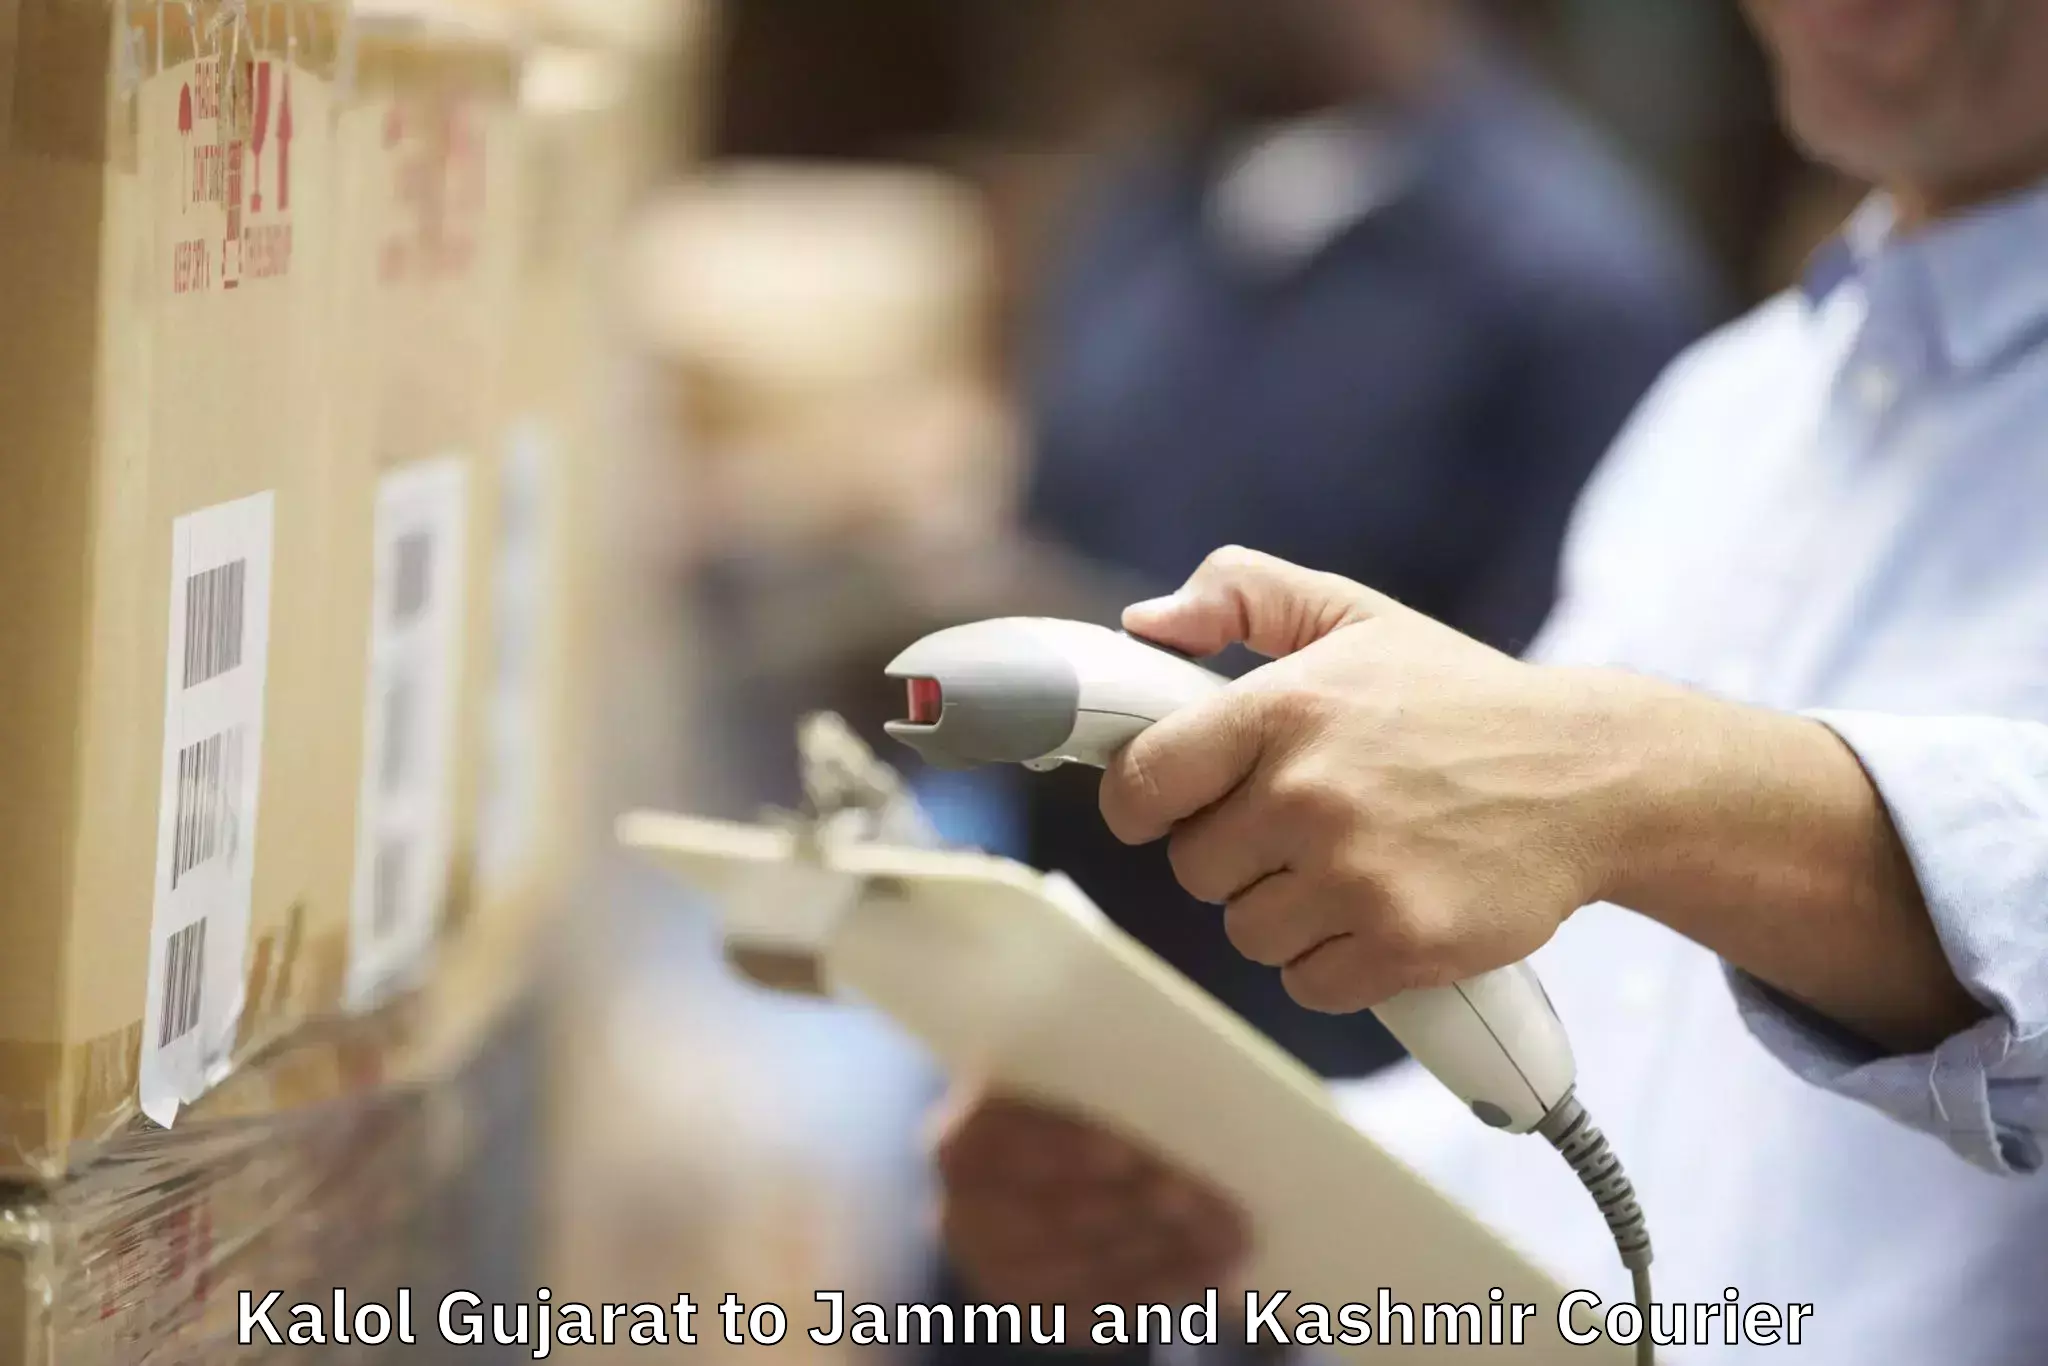 Furniture transport service Kalol Gujarat to Jammu and Kashmir